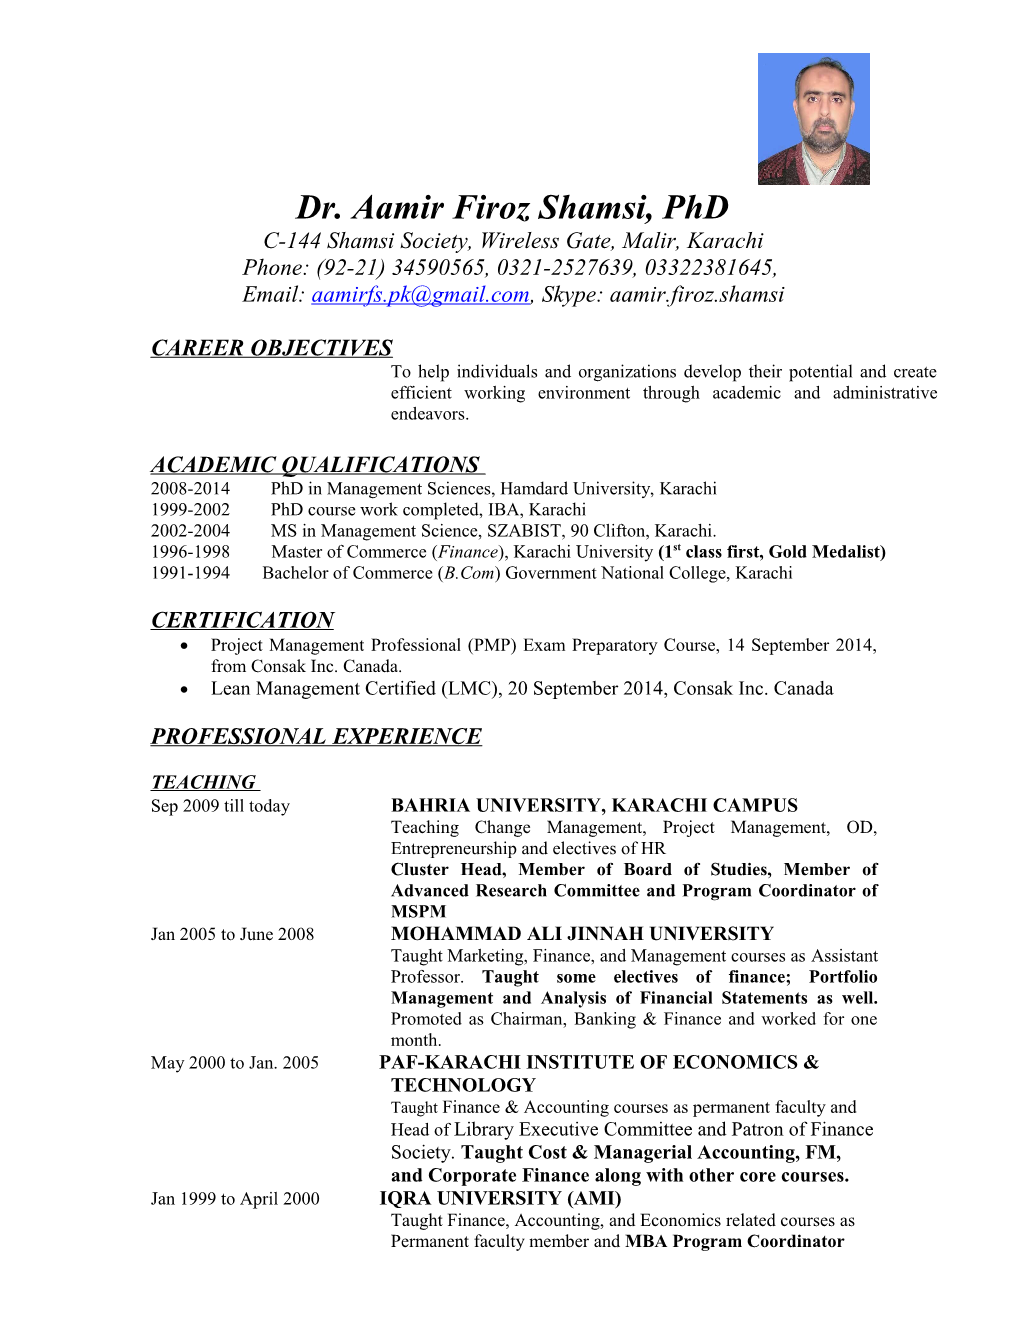 Dr. Aamir Firoz Shamsi, Phd